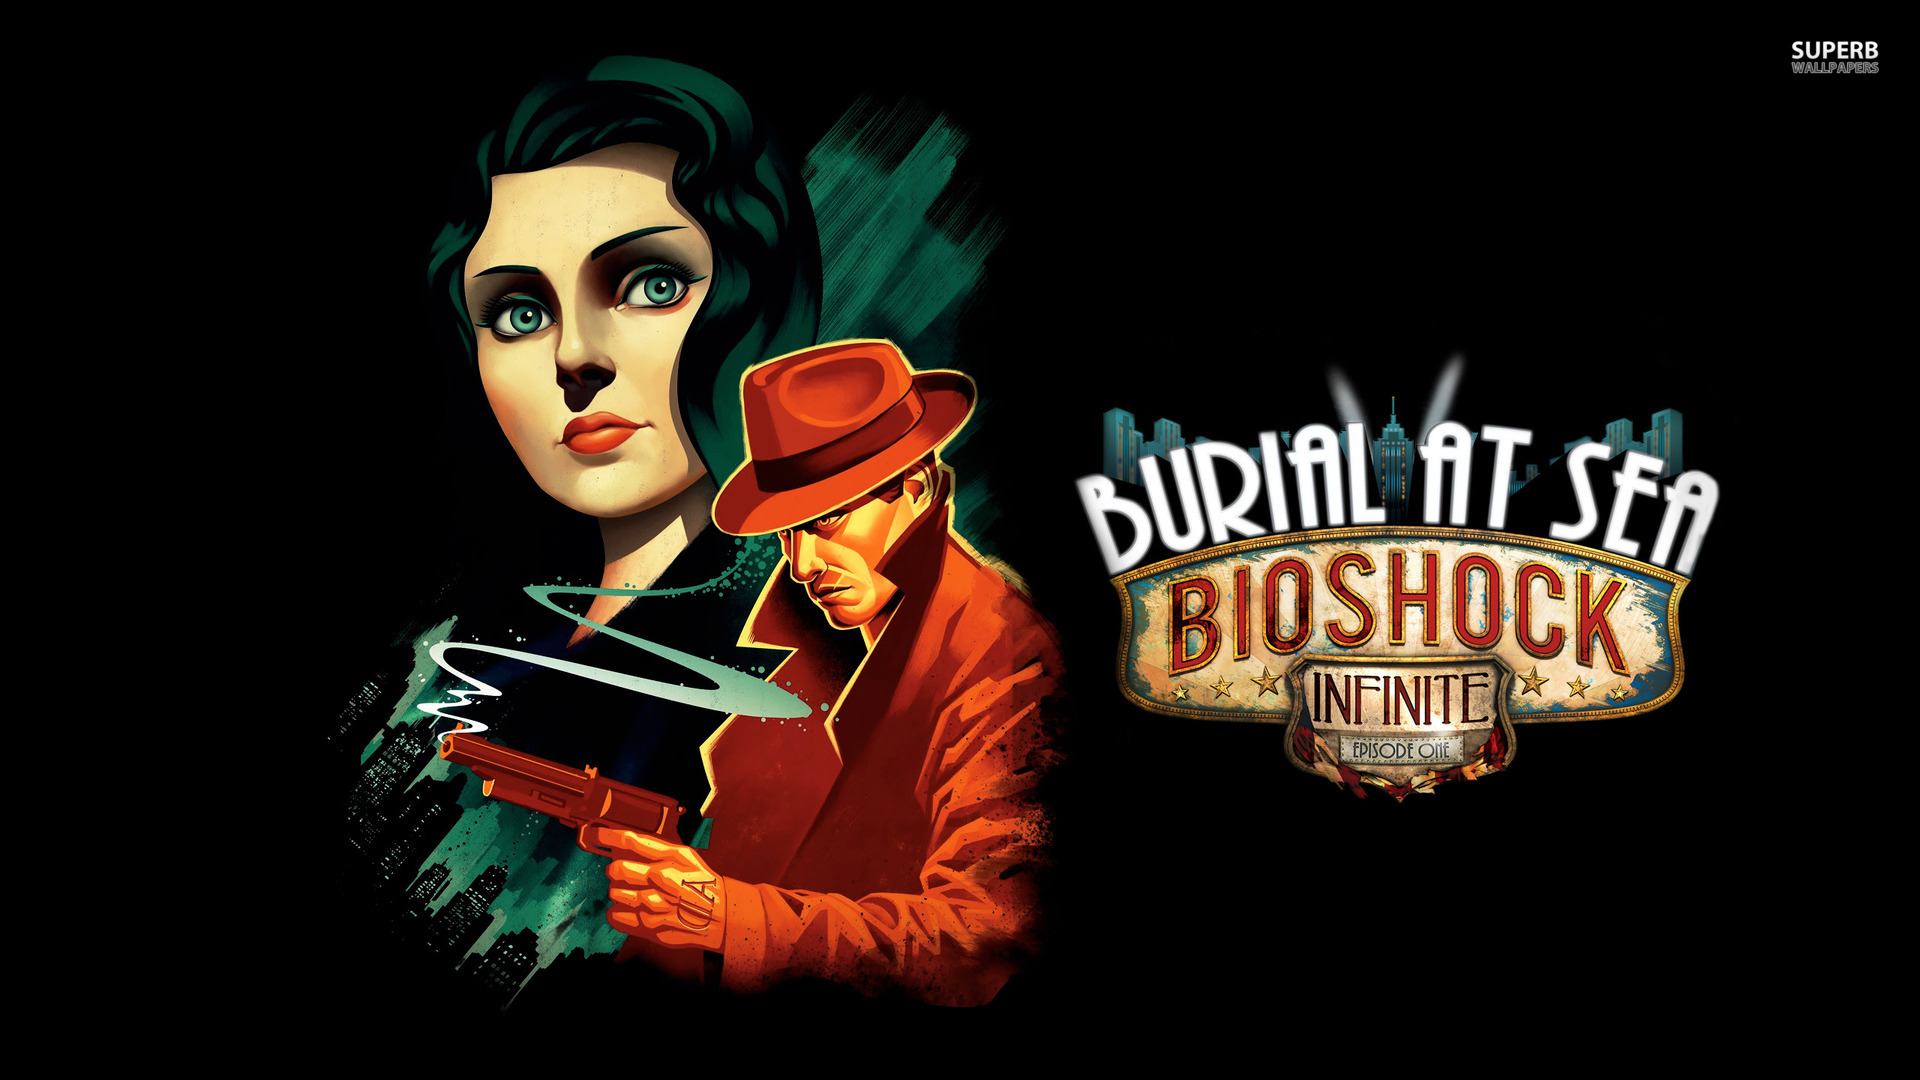 Video Game BioShock Infinite: Burial at Sea HD Wallpaper | Background Image